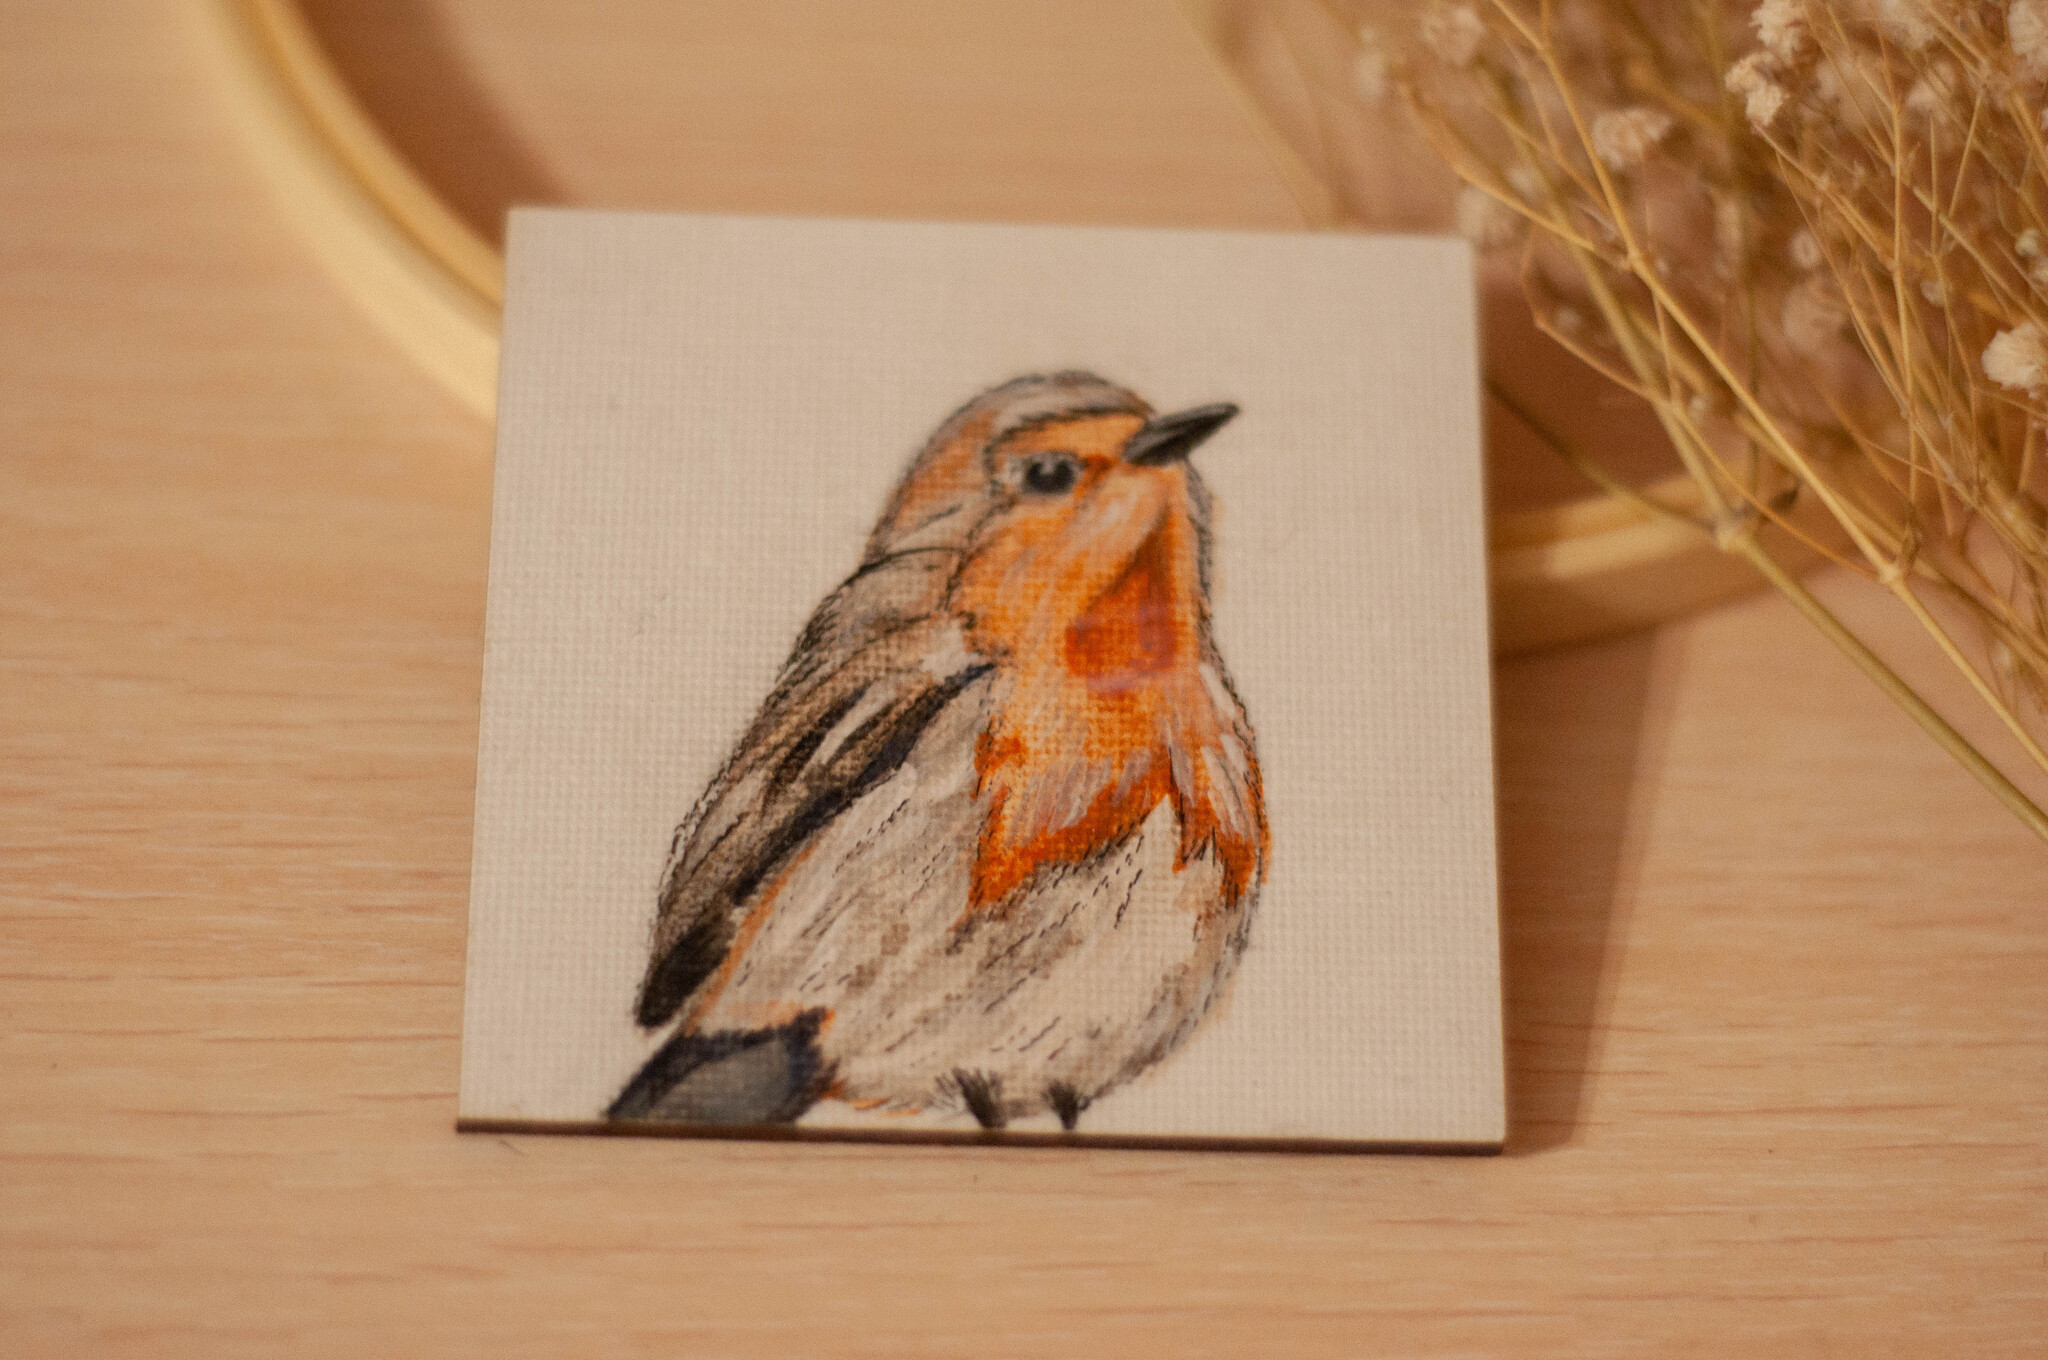 Robin or robin bird, I draw refrigerator magnets - Longpost, Decor, Paints, Beginner artist, Handmade, Canvas, Acrylic, Magnets, Painting, Painting, My